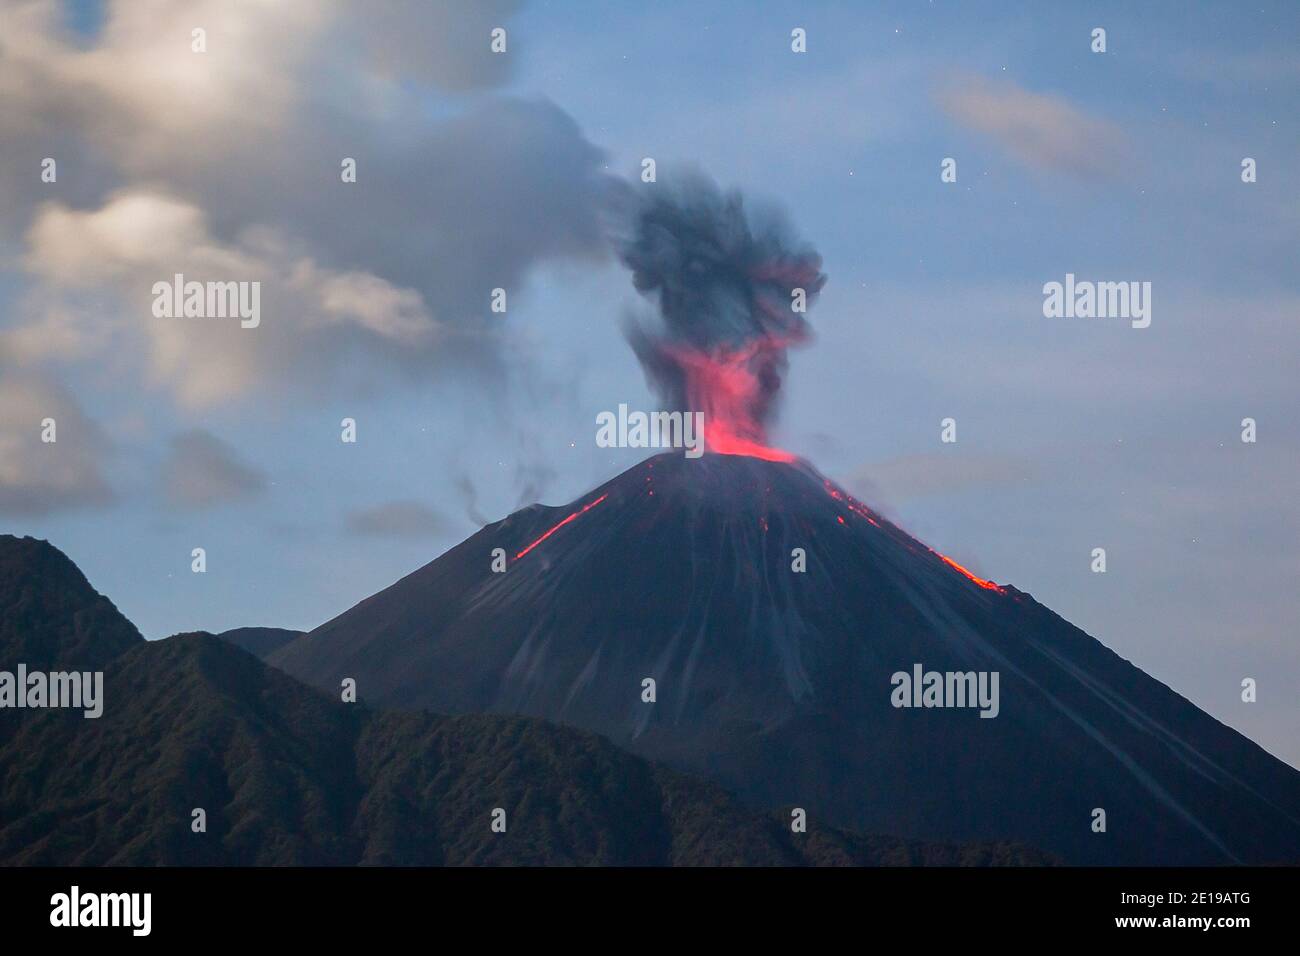 Reventador Volcano, Ecuador erupting at night, November 2015. Red hot rocks and gas are thrown out of the crater. Reventador rises out of tropical rai Stock Photo